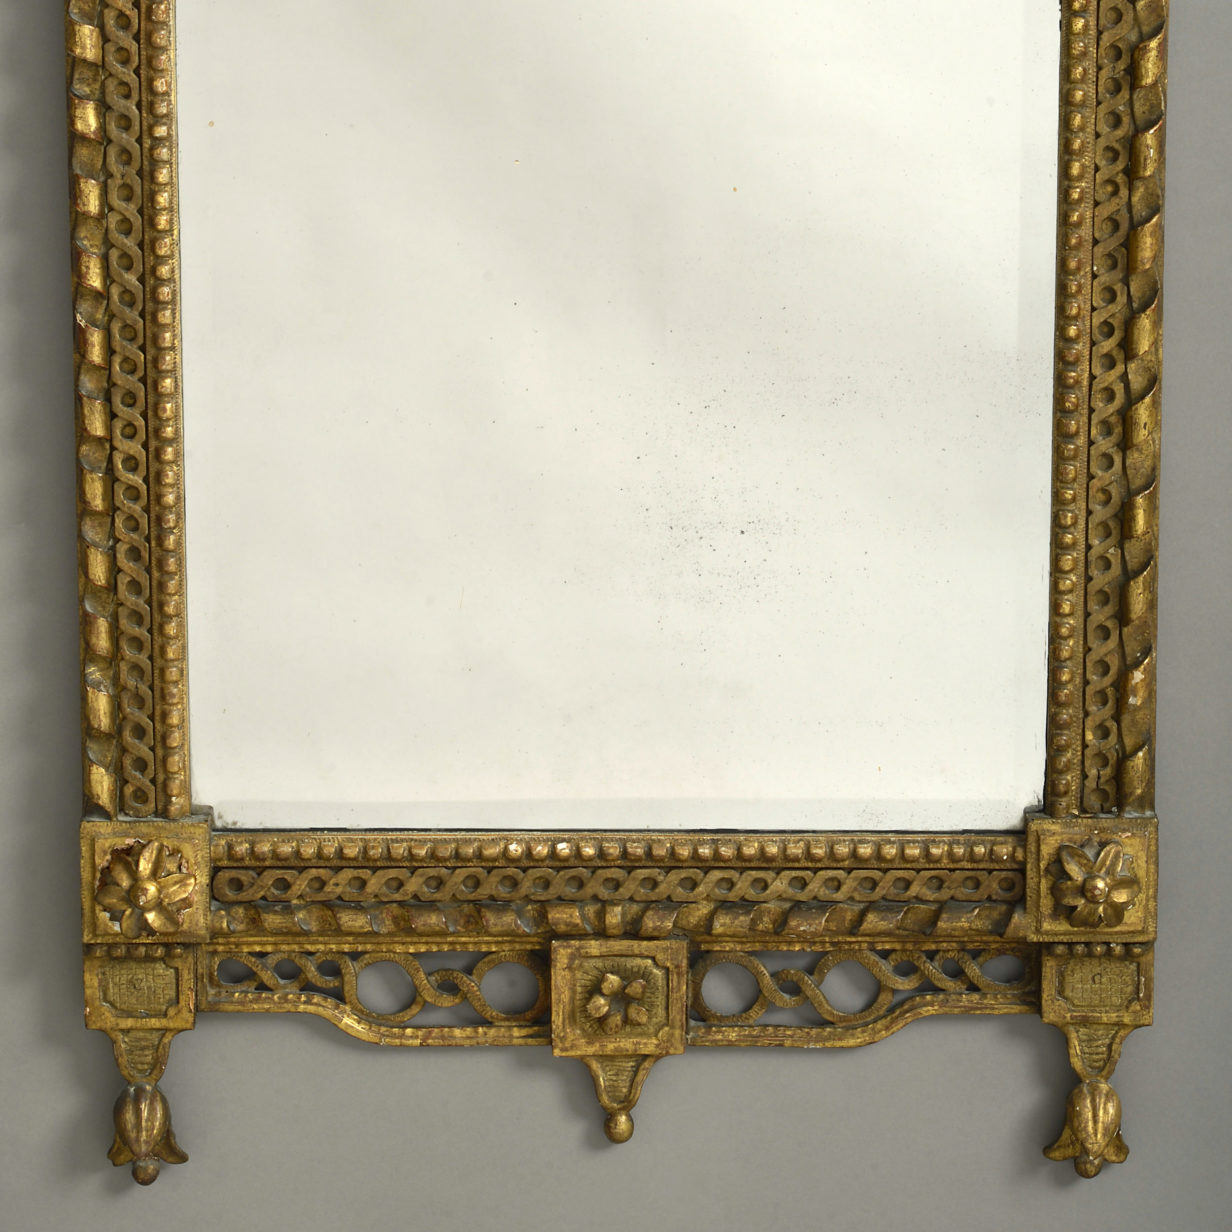 An 18th century giltwood pier mirror